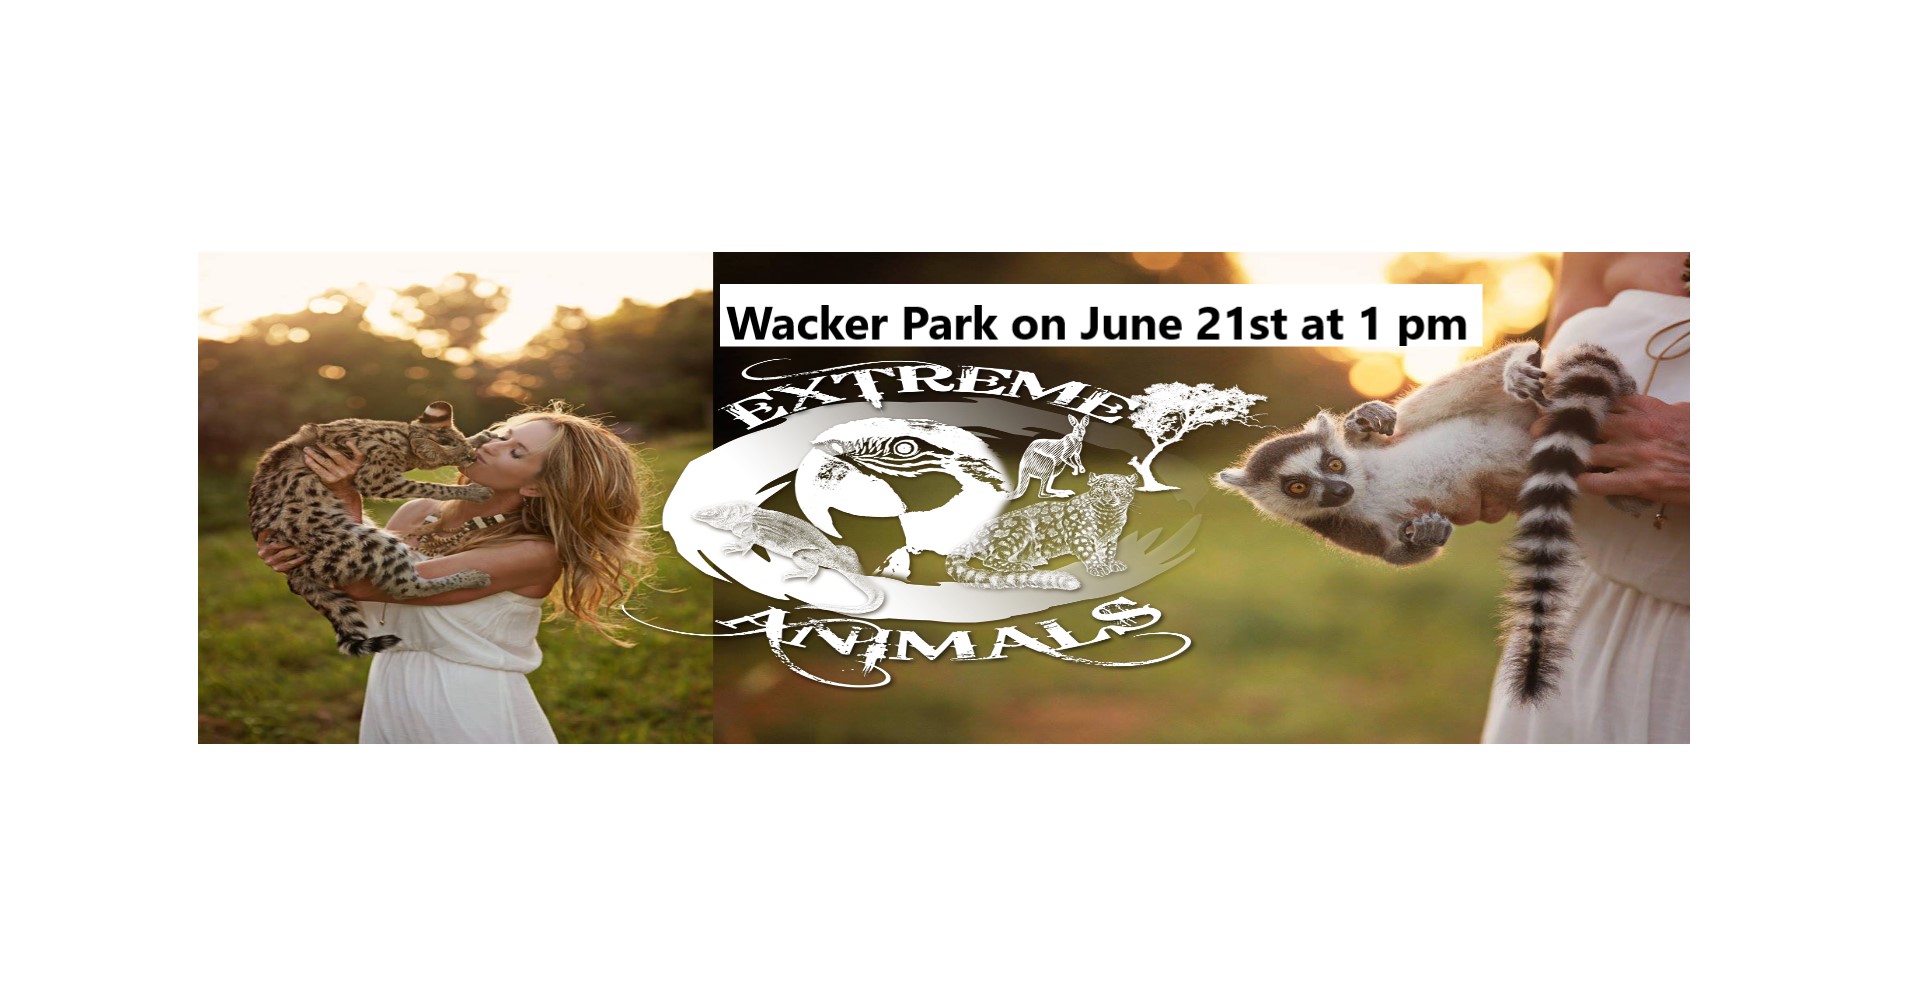 Extreme Animals at Wacker Park
June 21st at 1 pm
